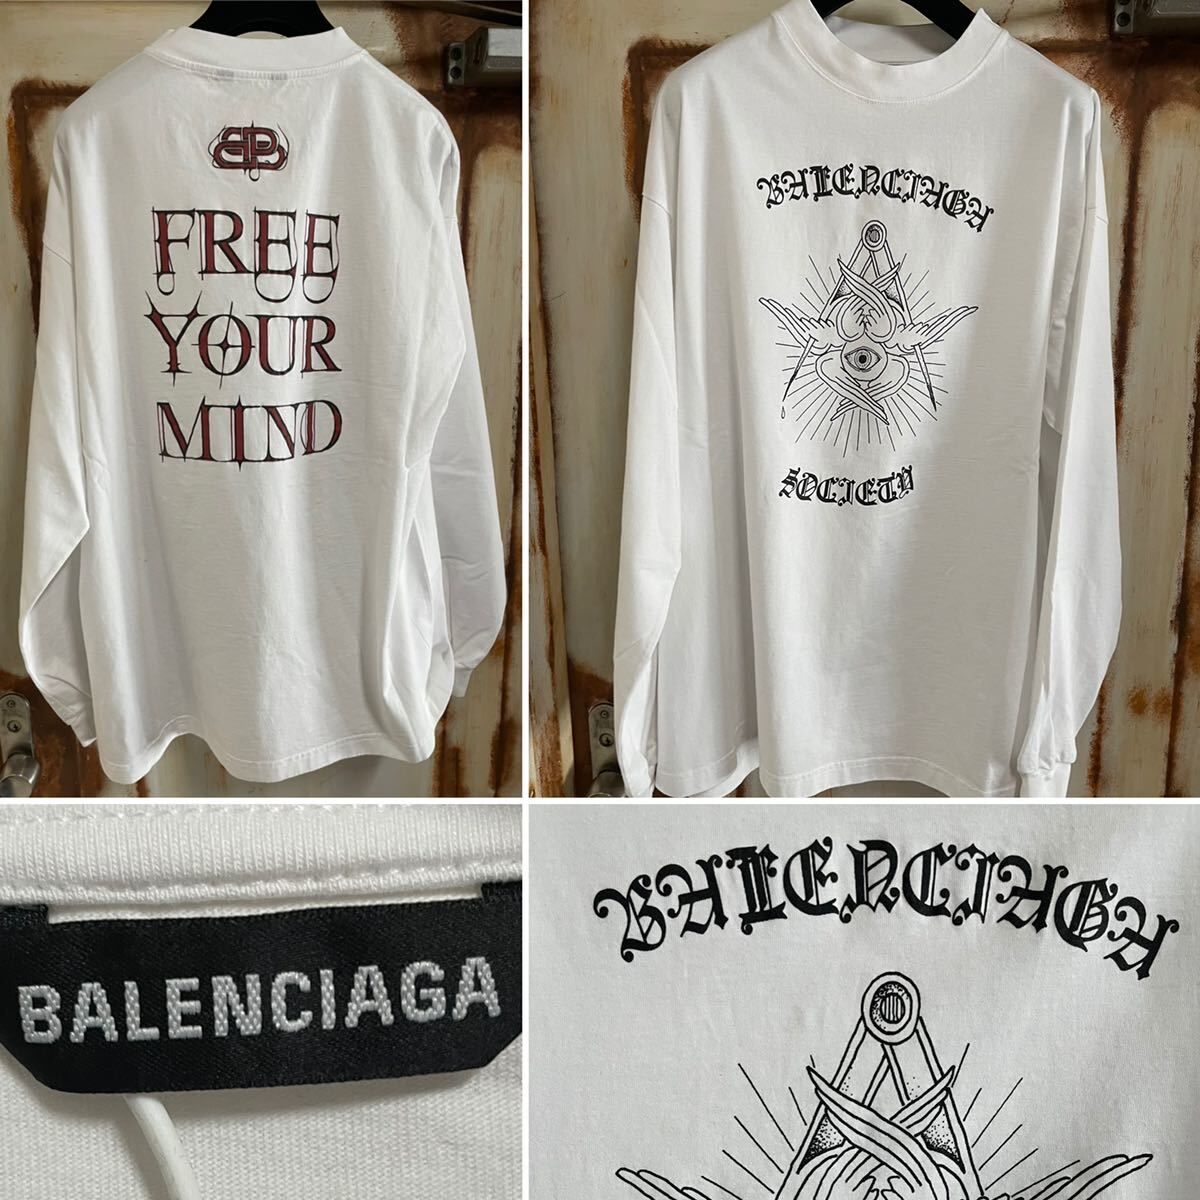 BALENCIAGA FREE YOUR MIND フリーメイソン tシャツ